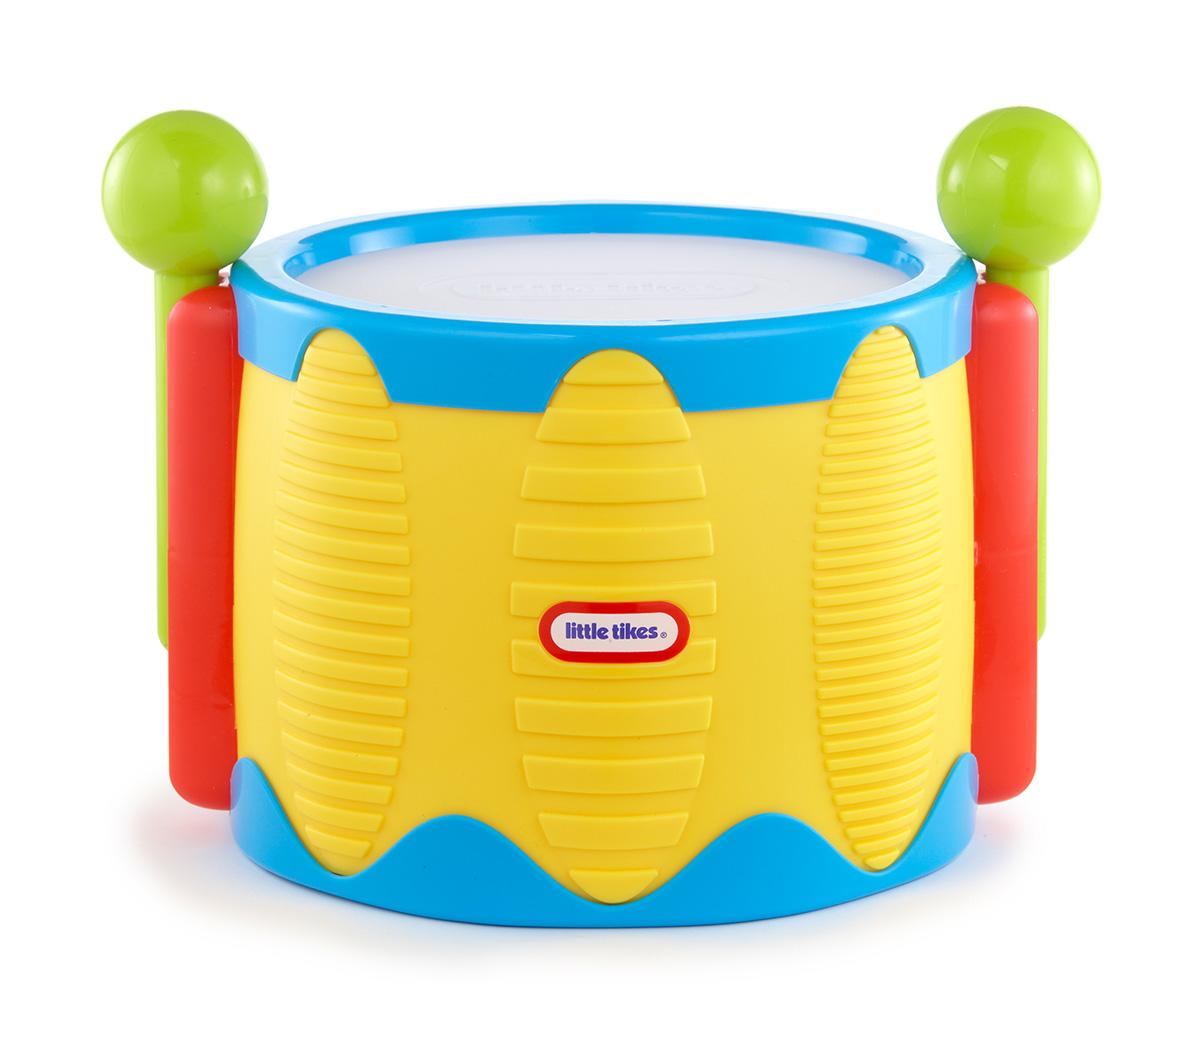 Little Tikes Tap A Tune Drum Toymaster Ballina